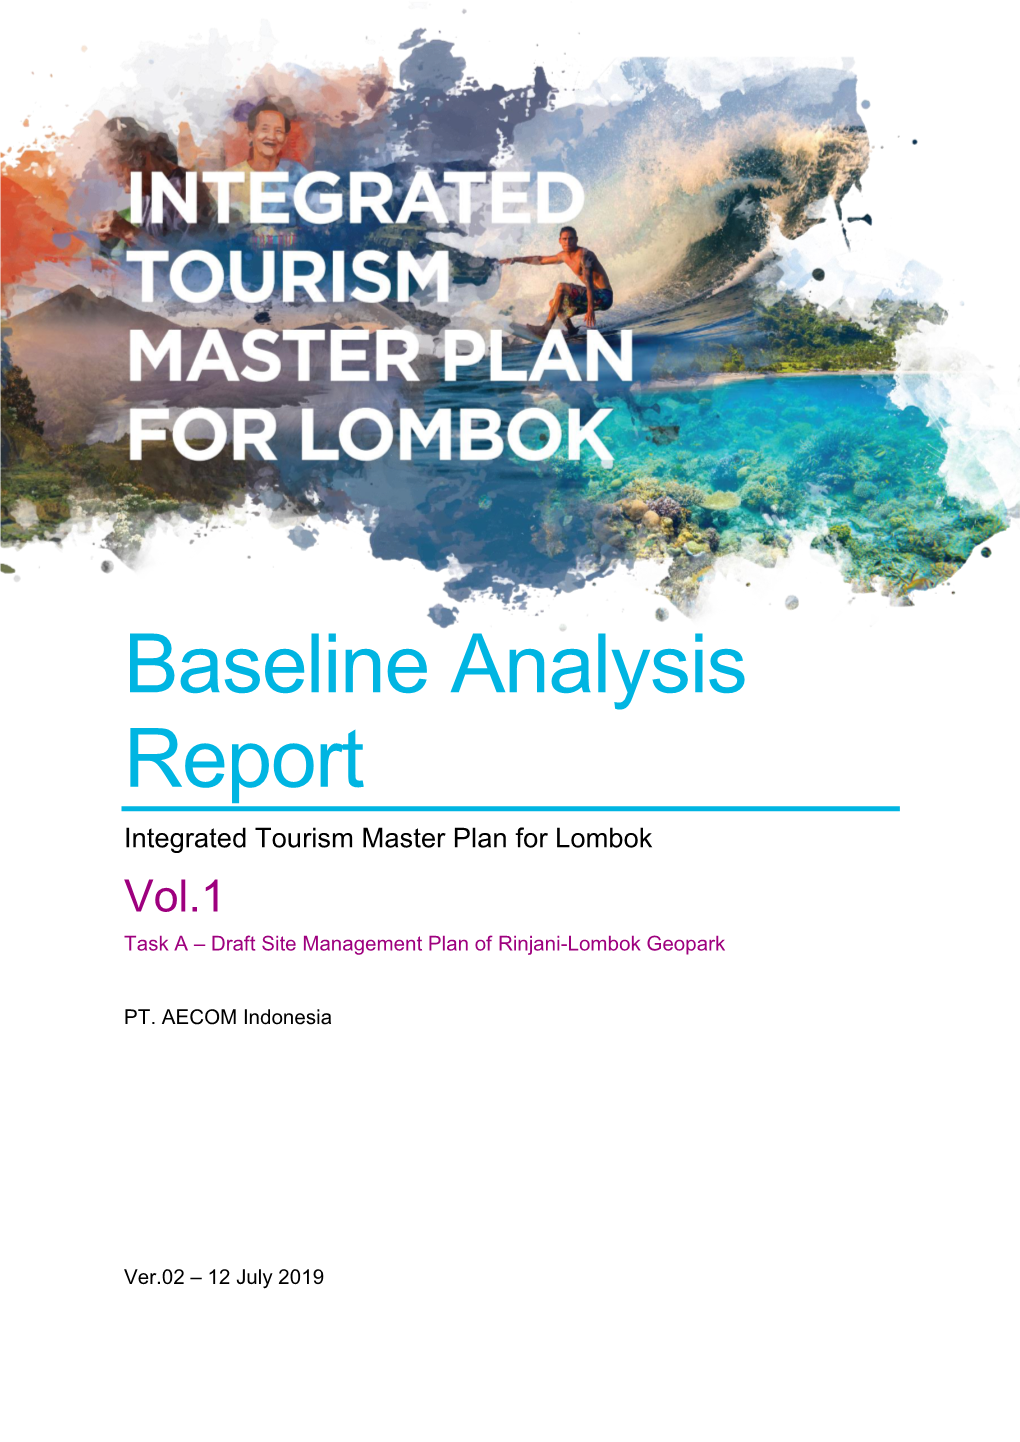 Baseline Analysis Report Integrated Tourism Master Plan for Lombok Vol.1 Task a – Draft Site Management Plan of Rinjani-Lombok Geopark